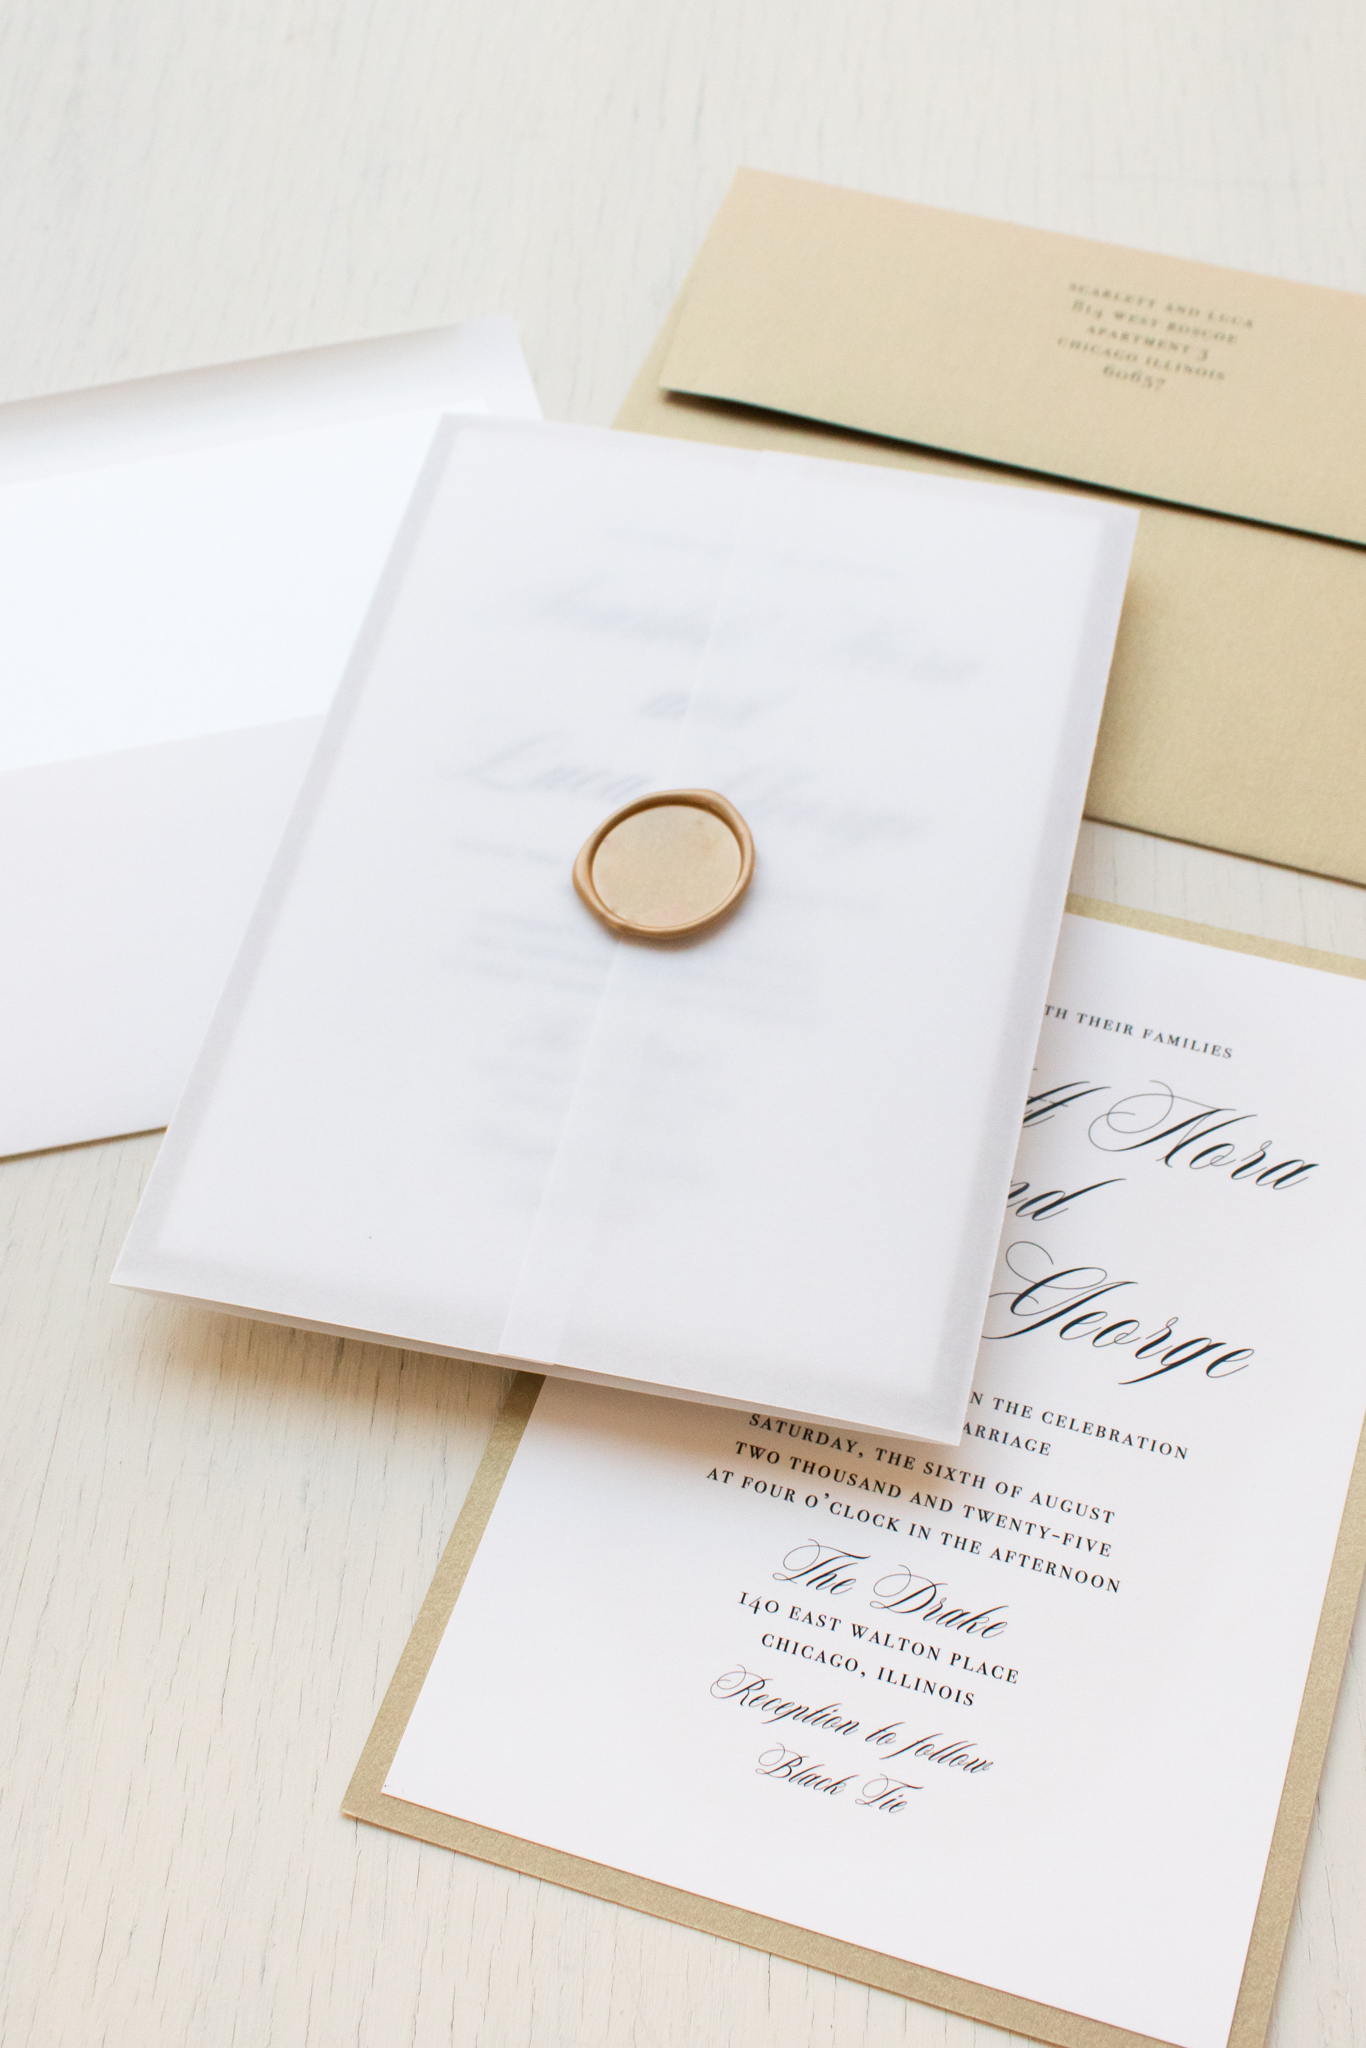 60 SETS White Gold Design Wedding Invitations with Vellum Paper